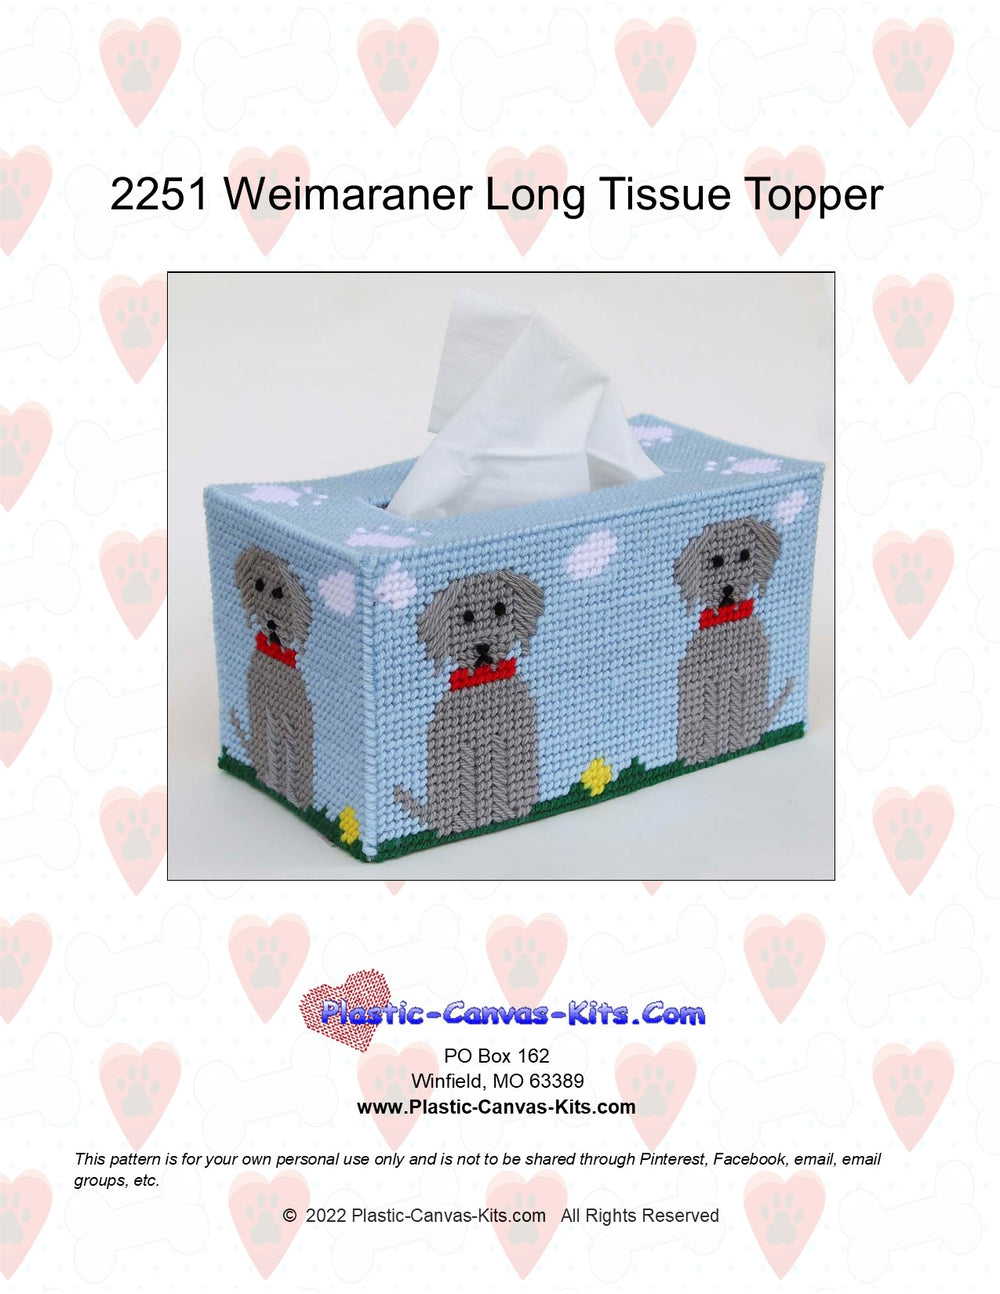 Weimaraner Long Tissue Topper